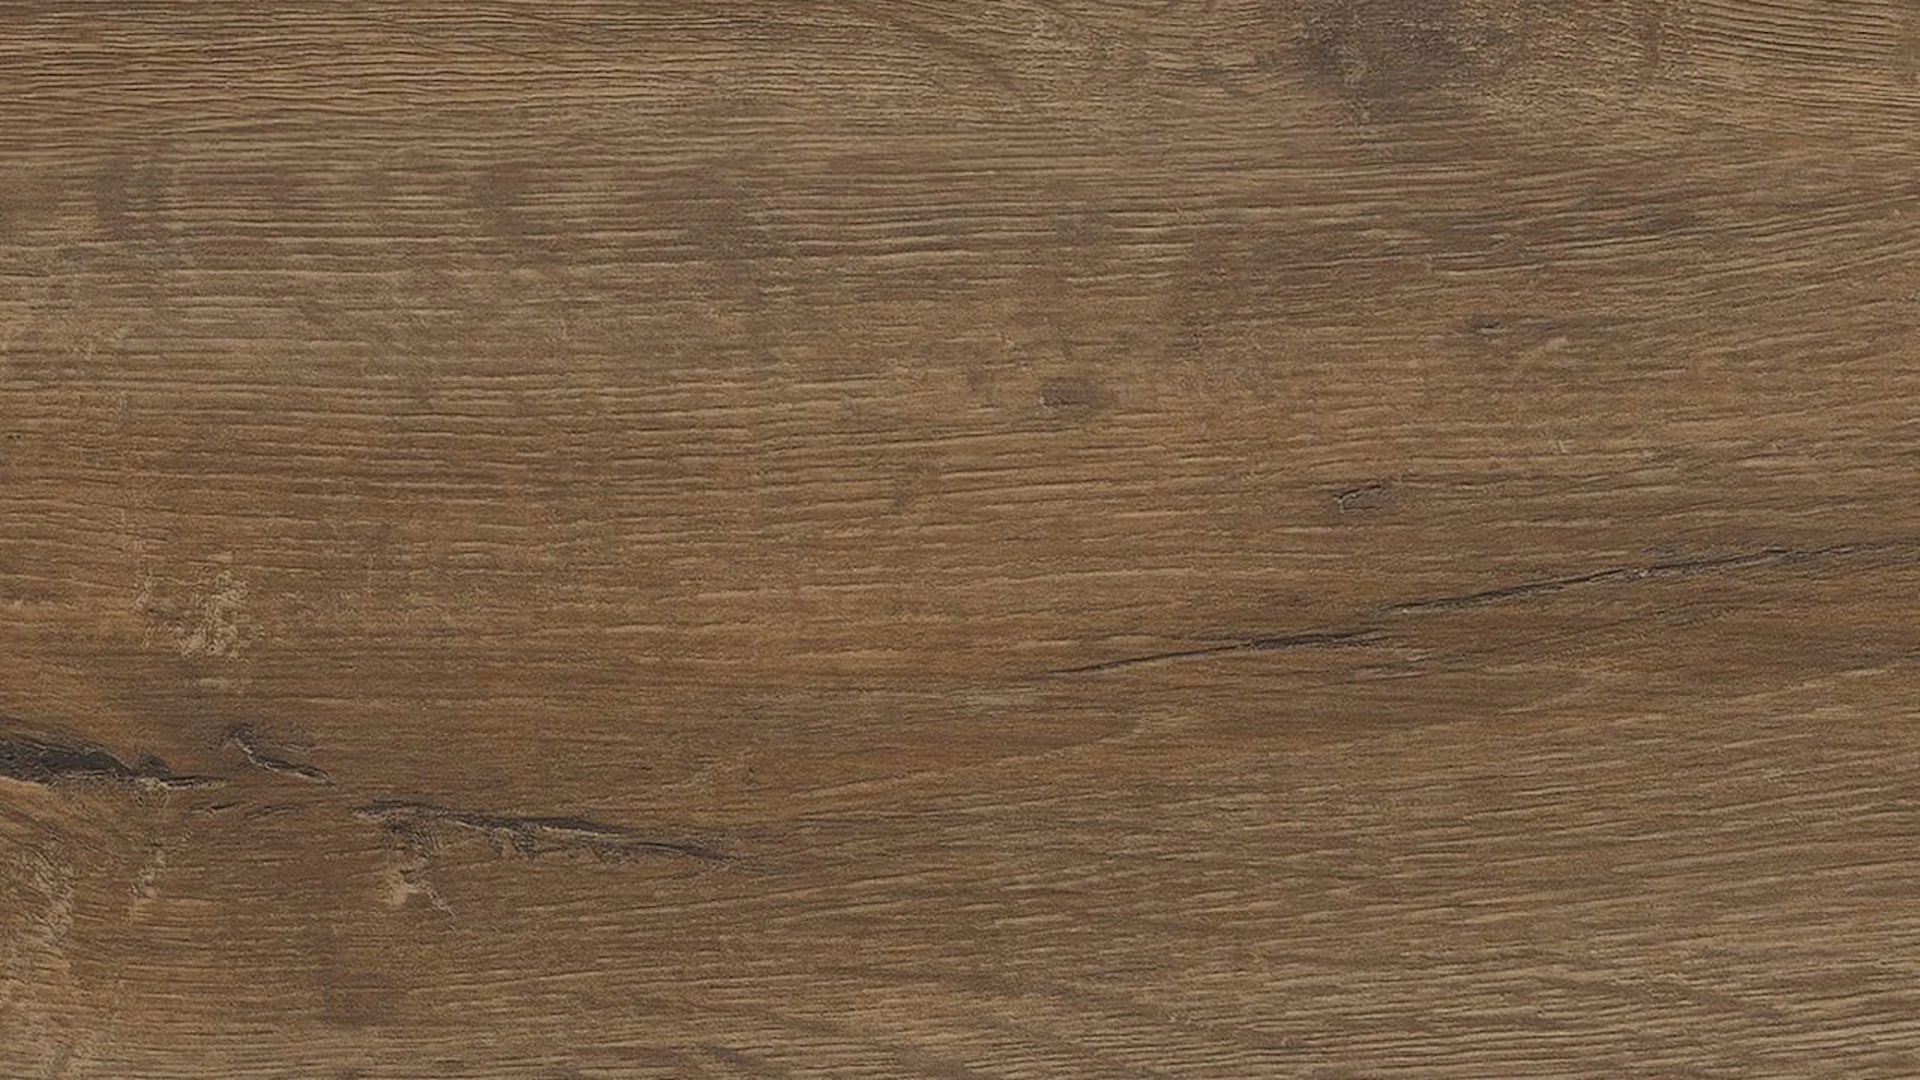 Haro Organic Flooring - Disano Saphir Wild oak (537238)